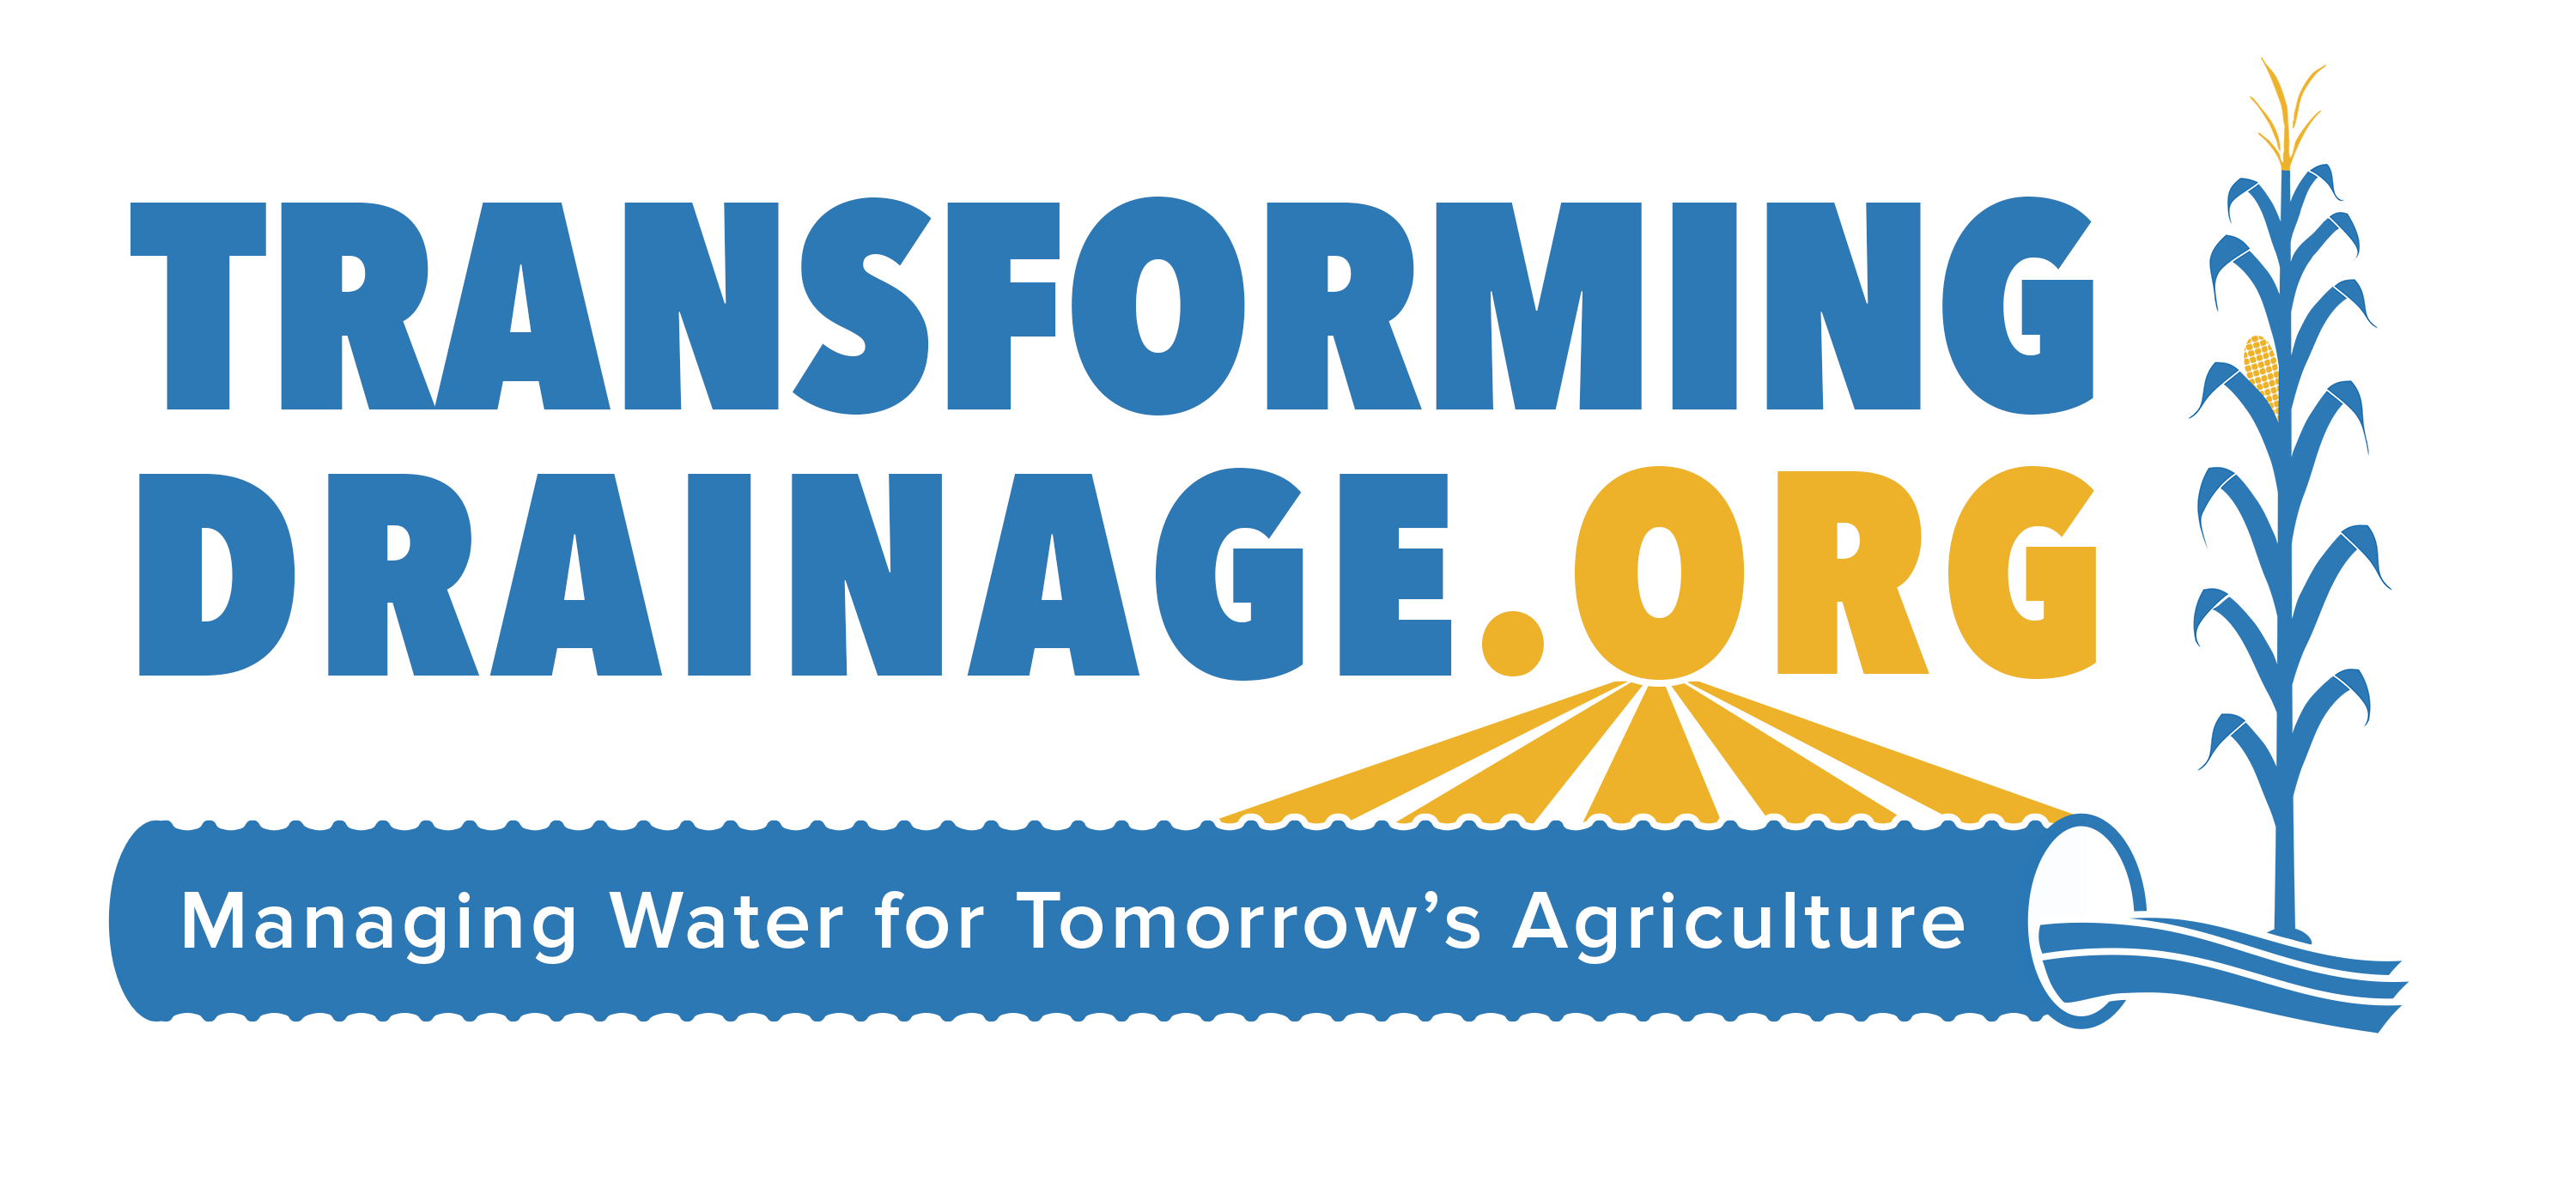 Transforming Drainage.org